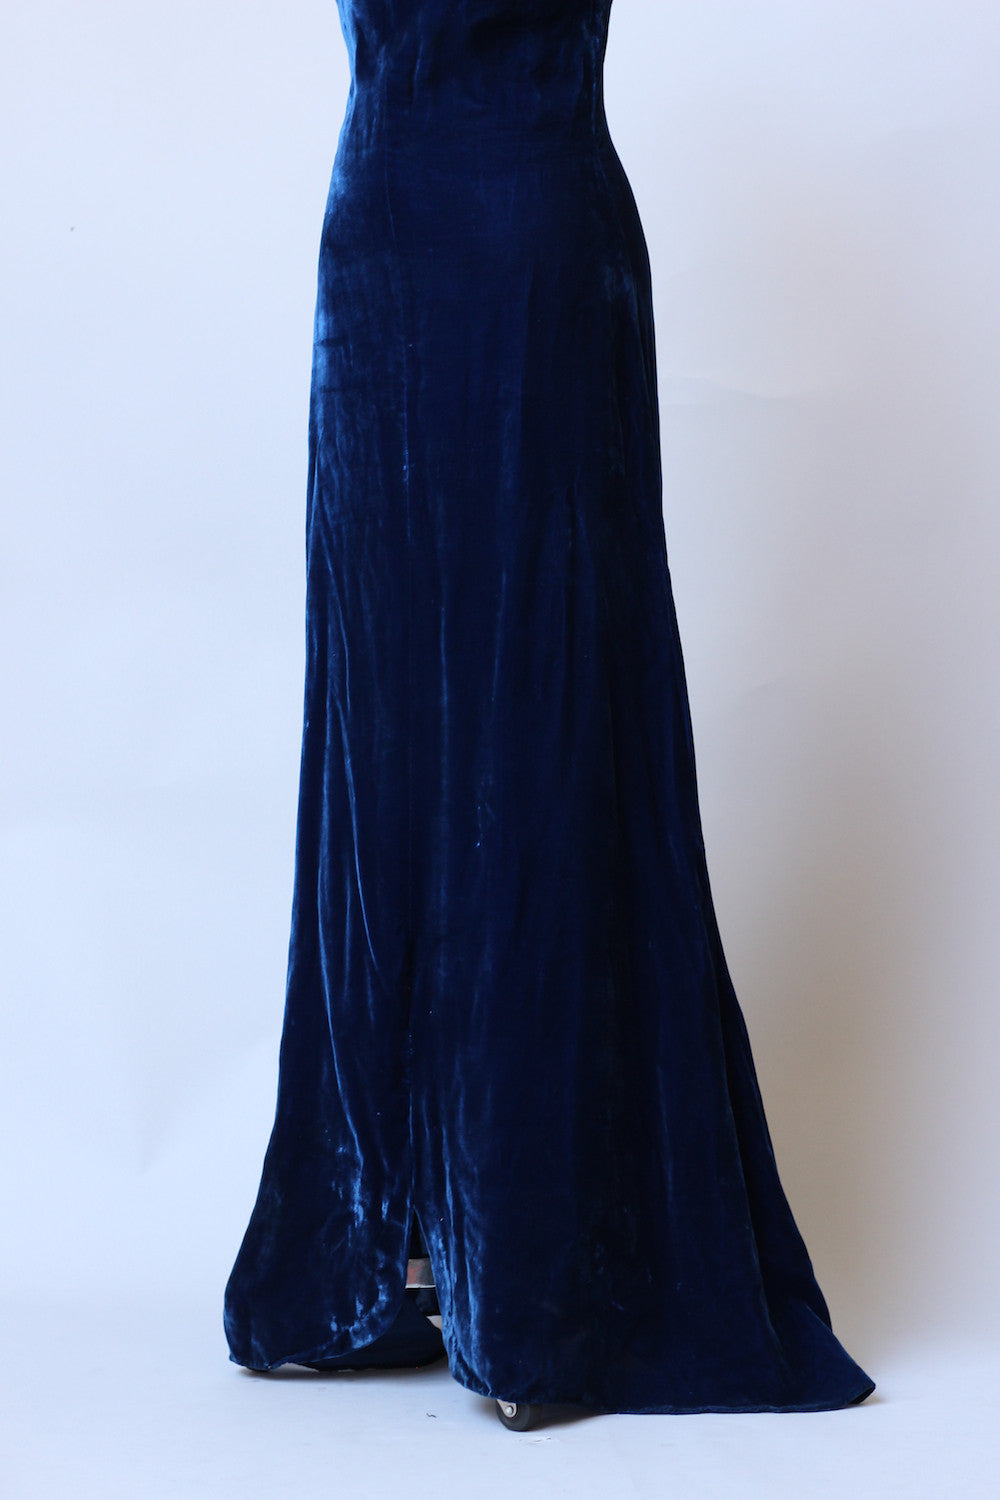 Stunning 1930s Sapphire Blue Silk Velvet Gown with Dress Clip